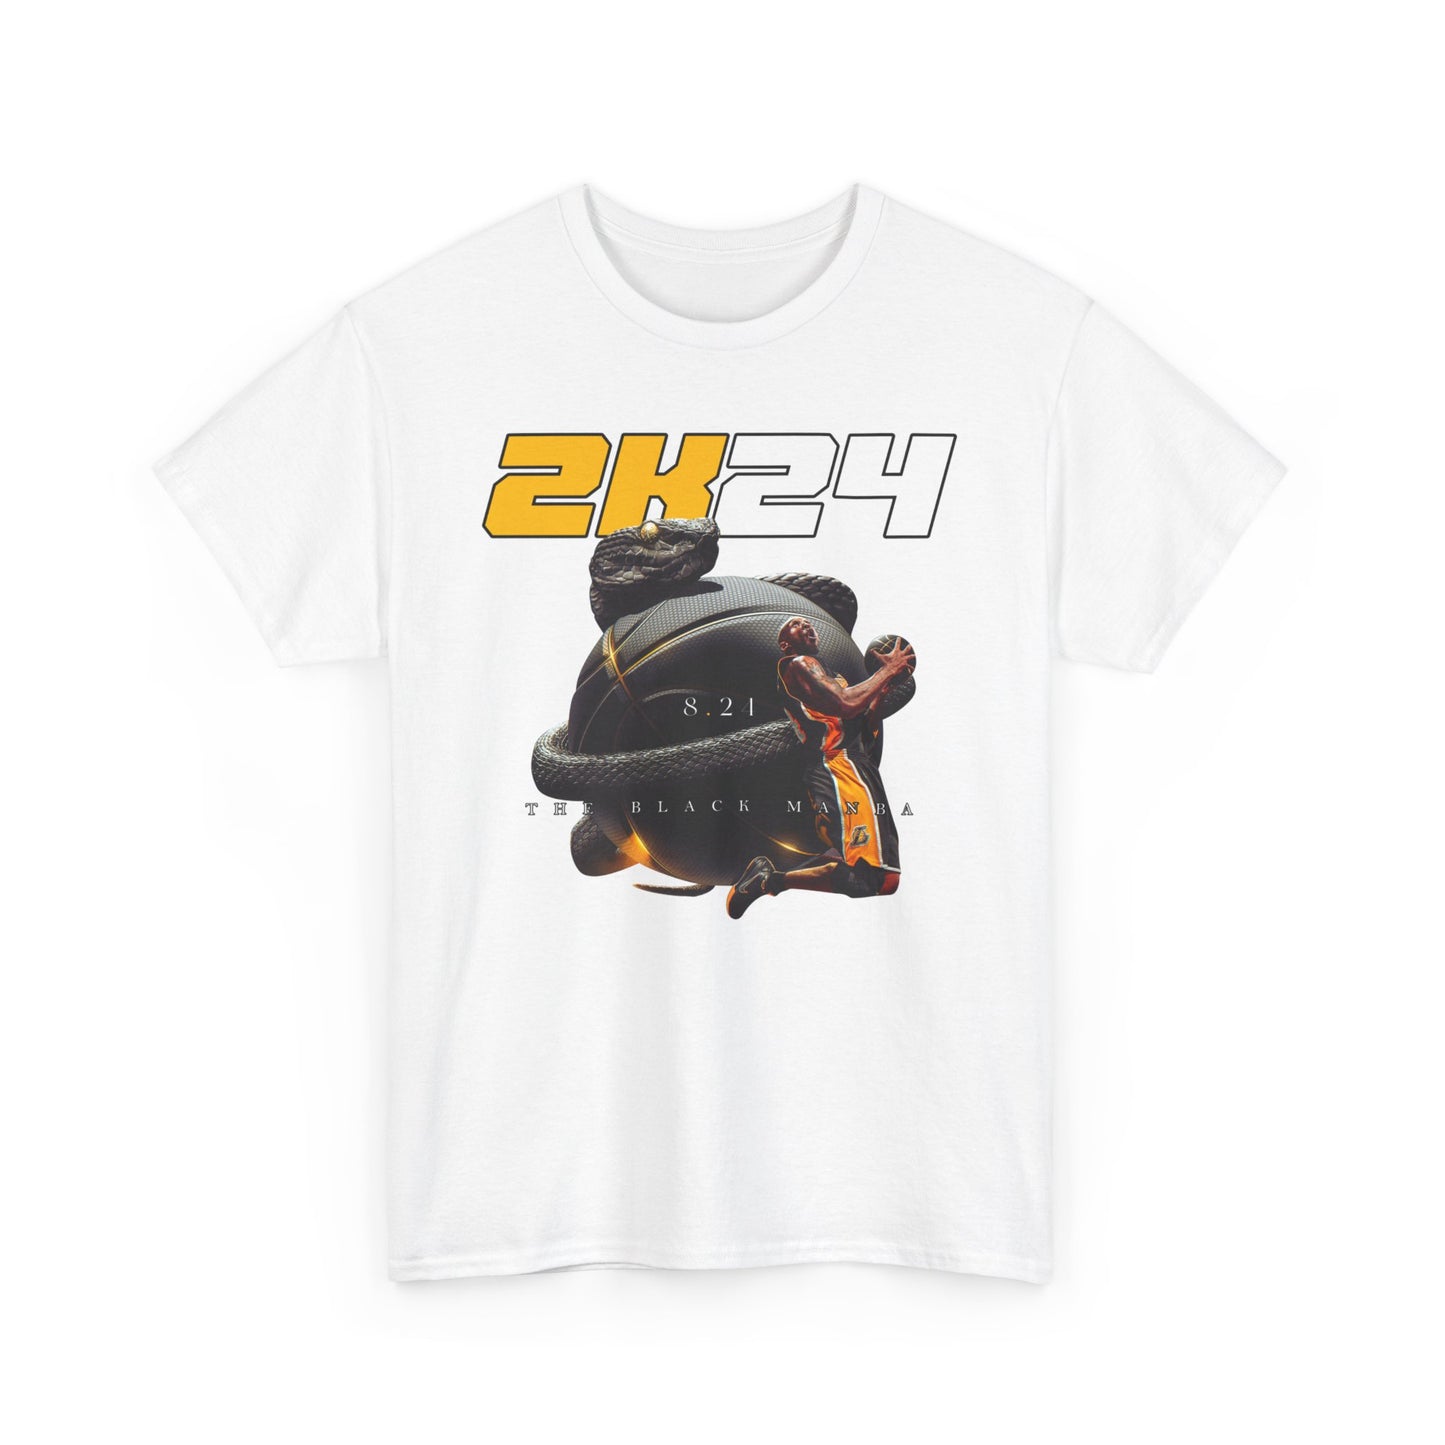 The Black Mamba Kobe Bryant High Quality Printed Unisex Heavy Cotton T-shirt